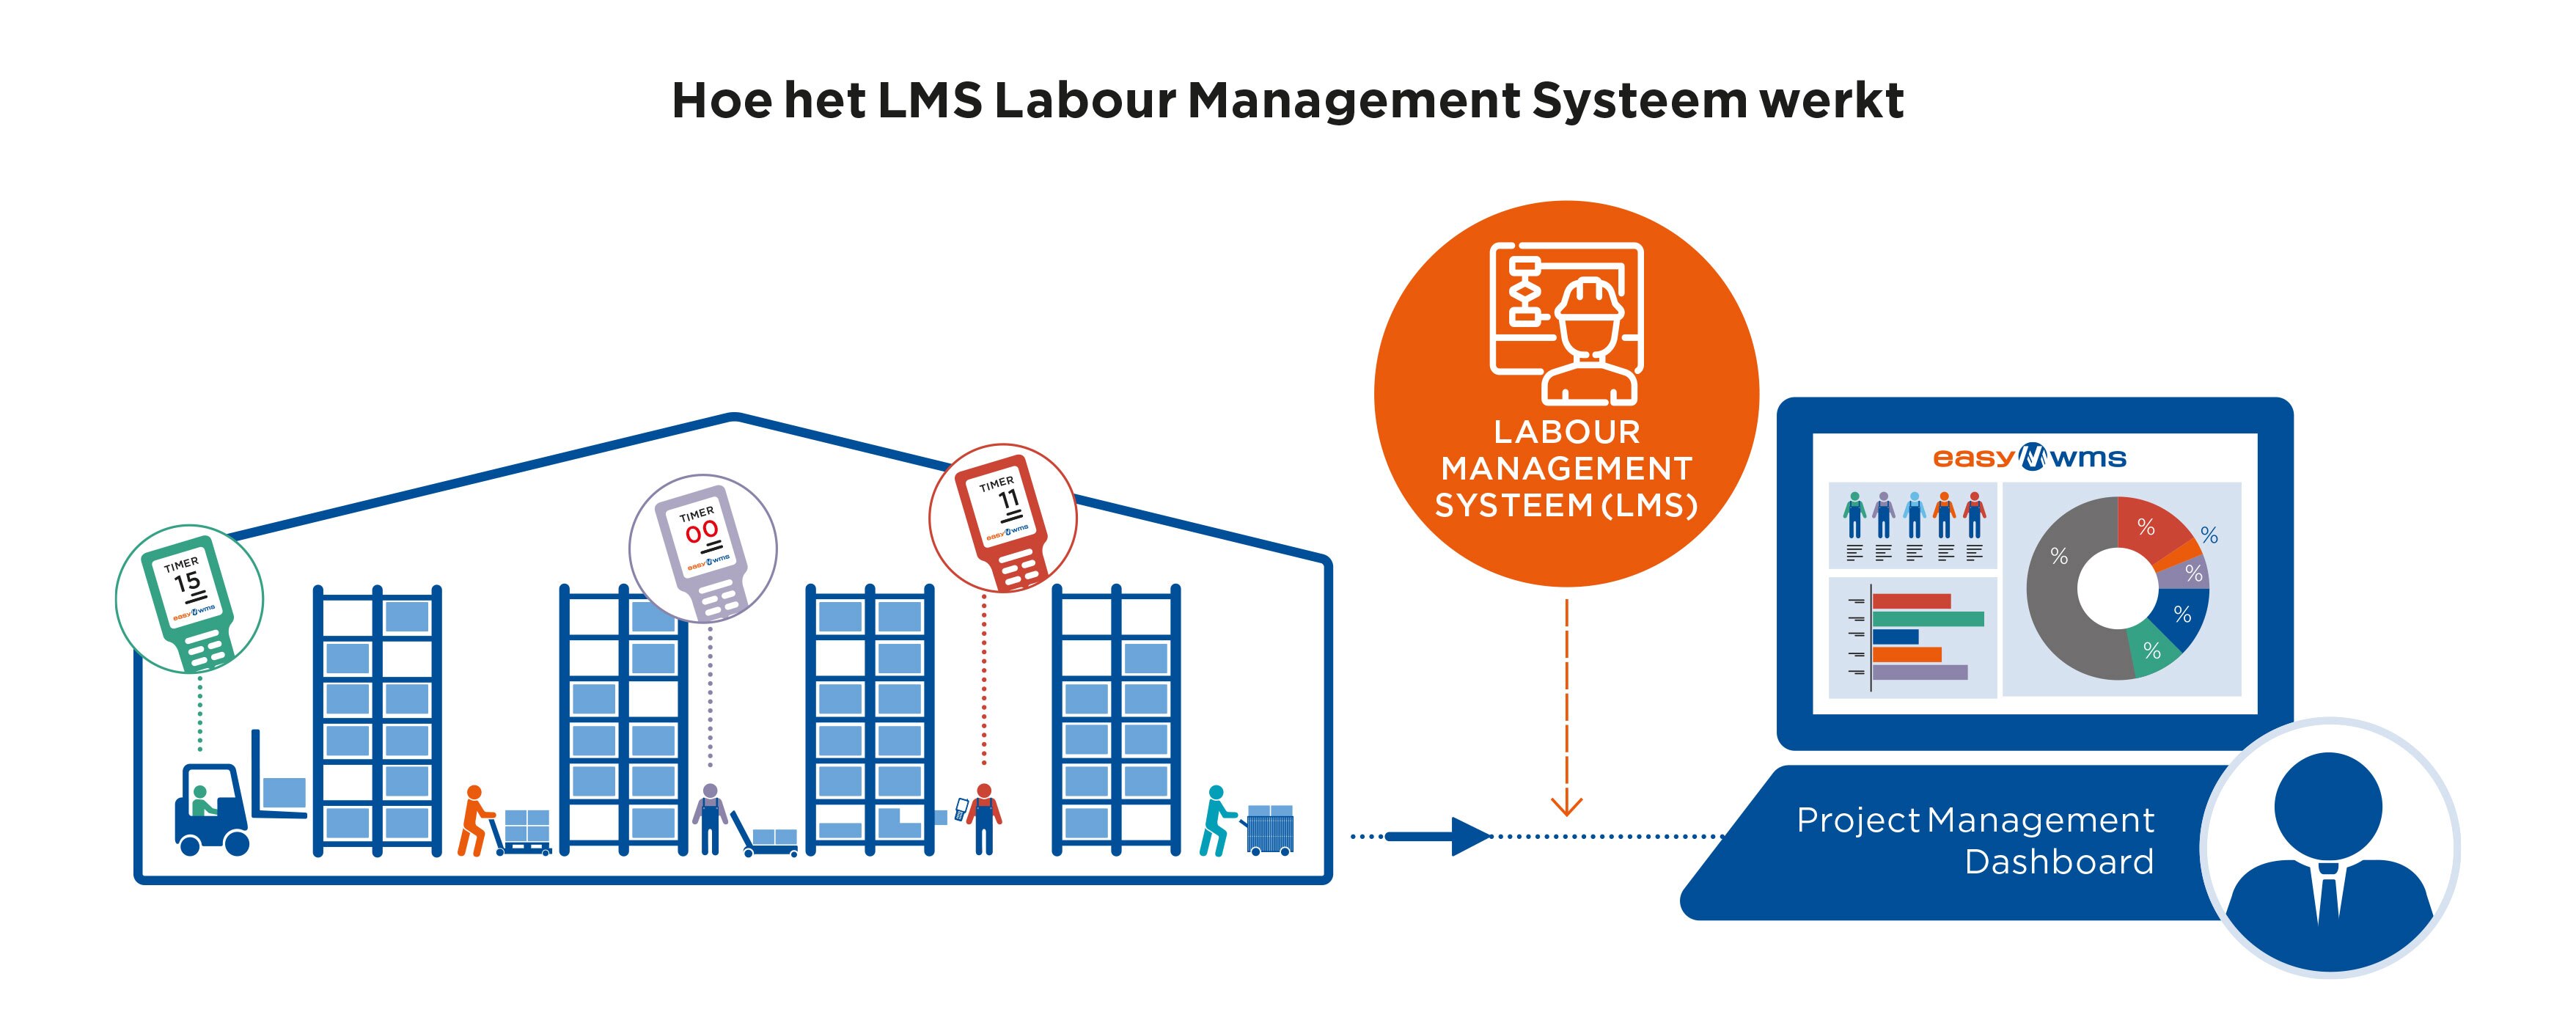 Hoe het LMS Labour Management Systeem werkt